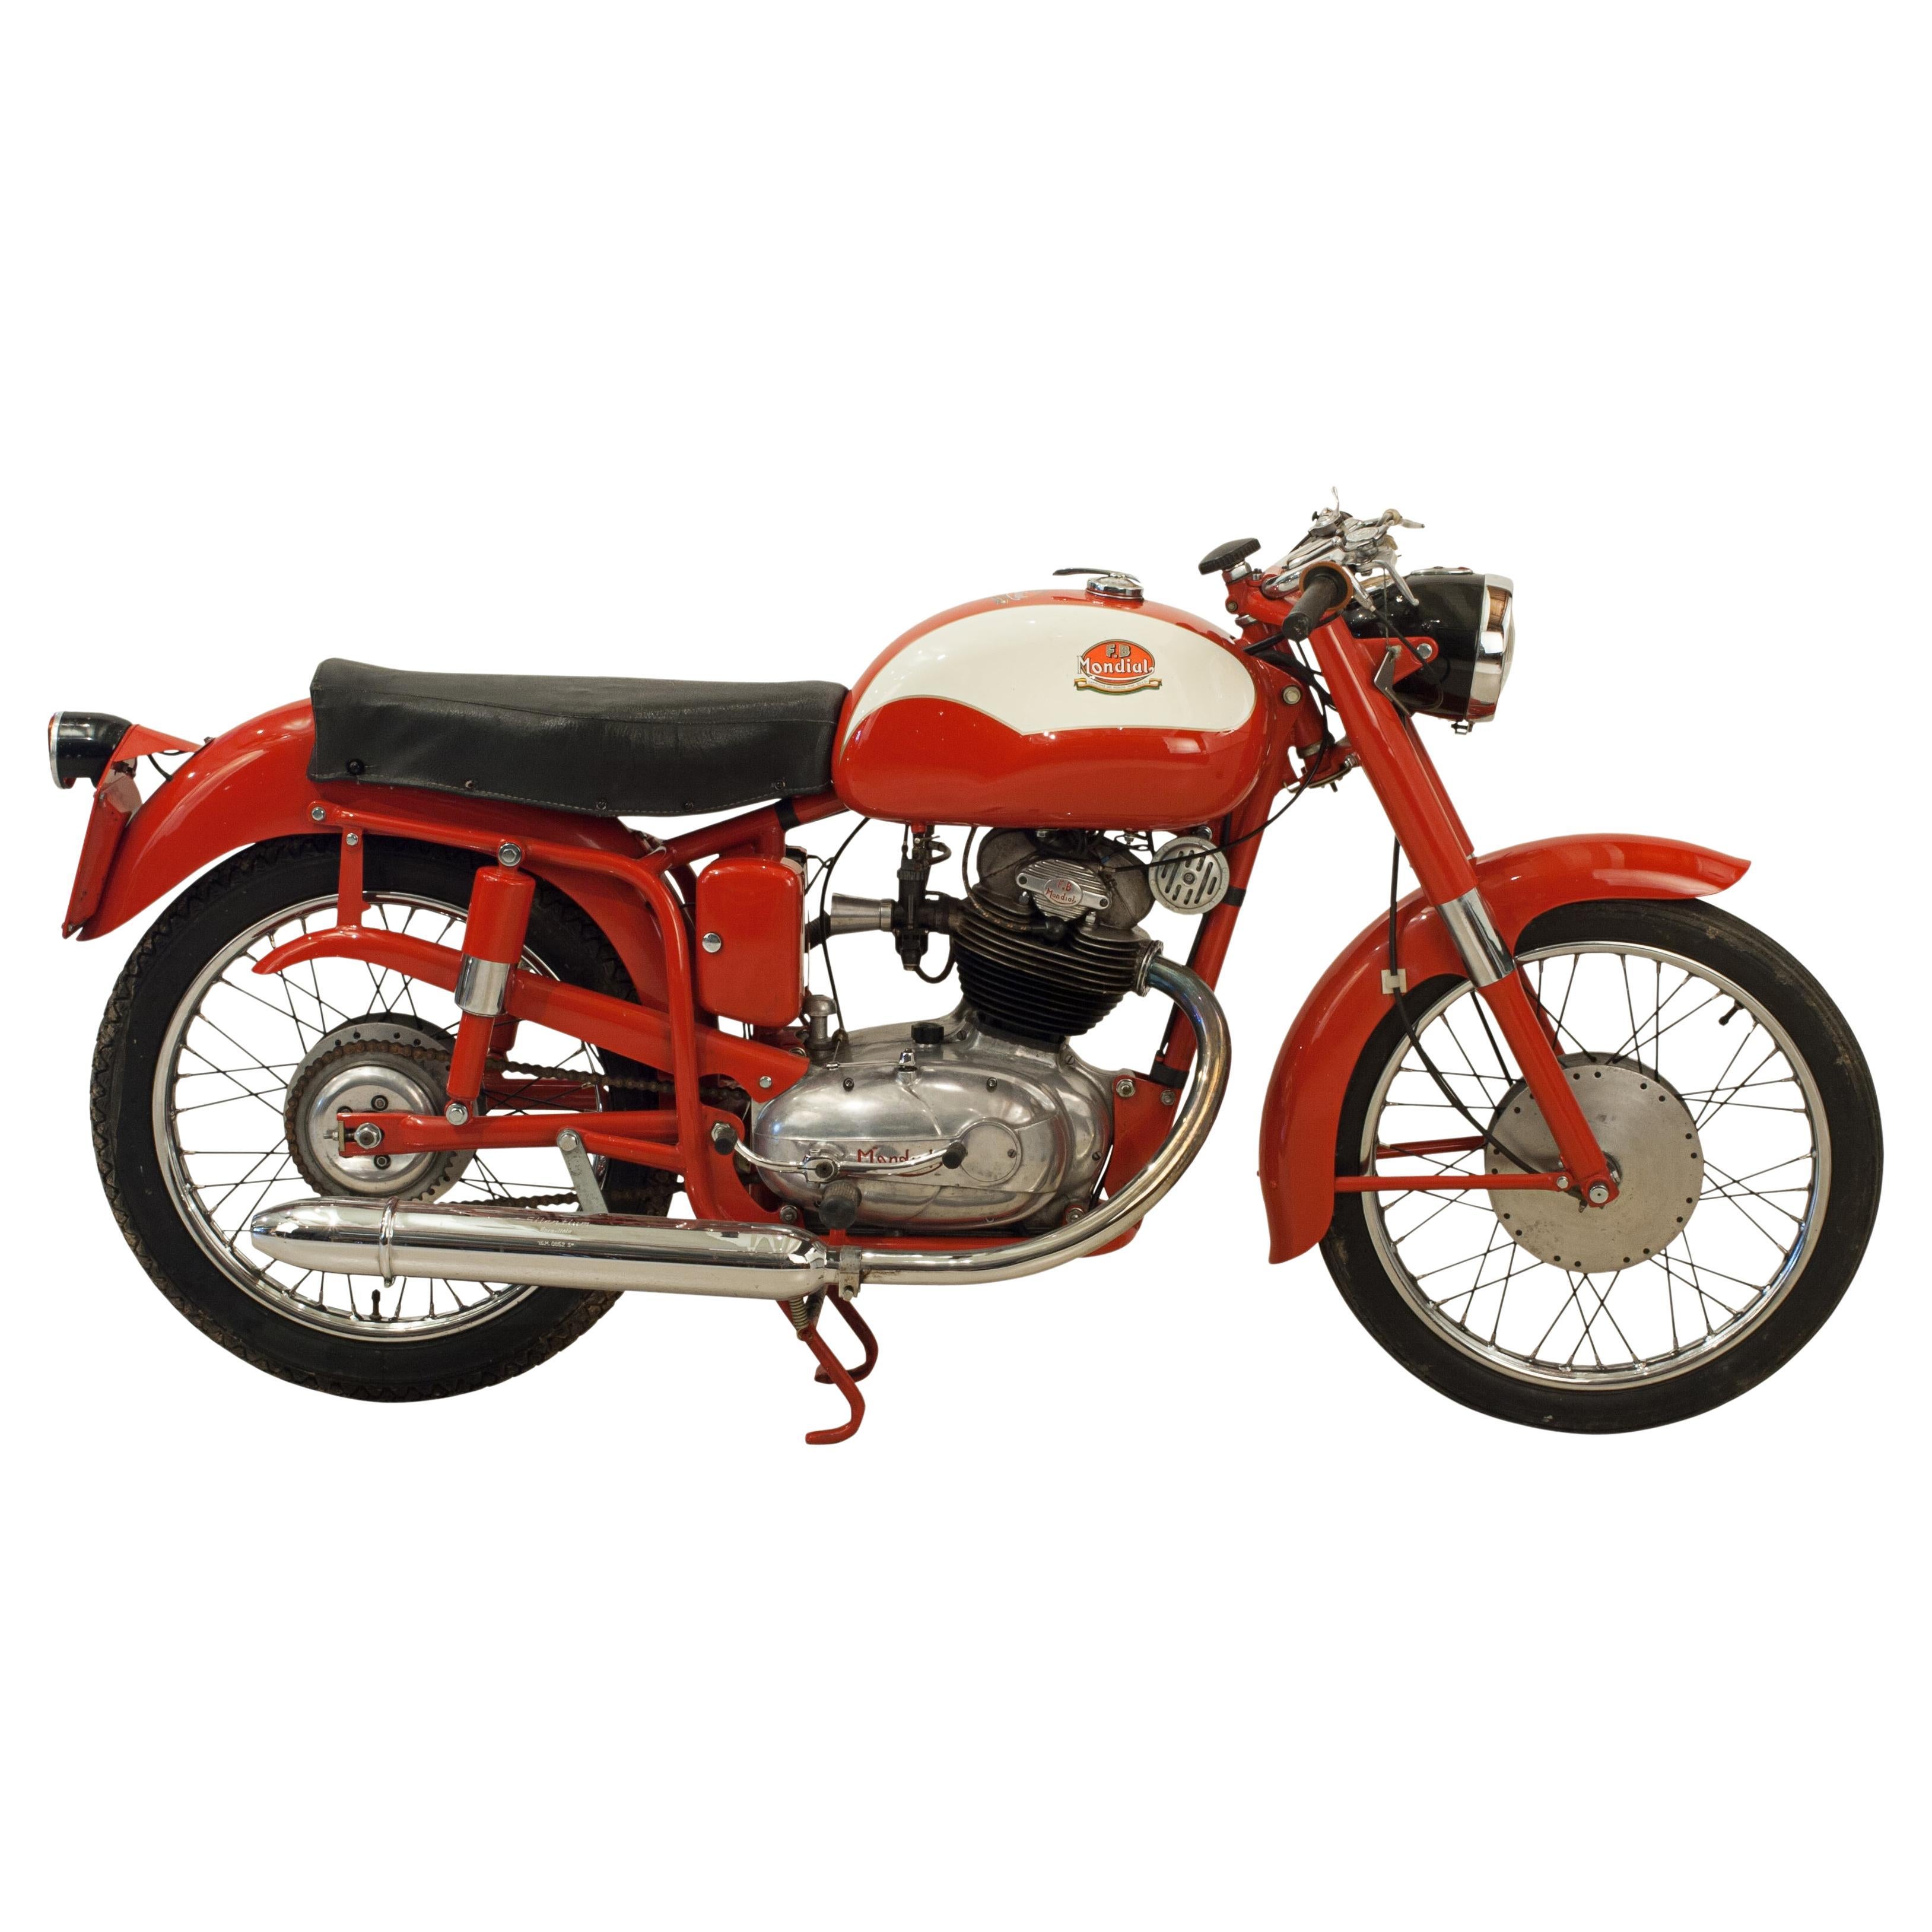 Moto italienne, Mondial 1960 Sprint, moto classique.